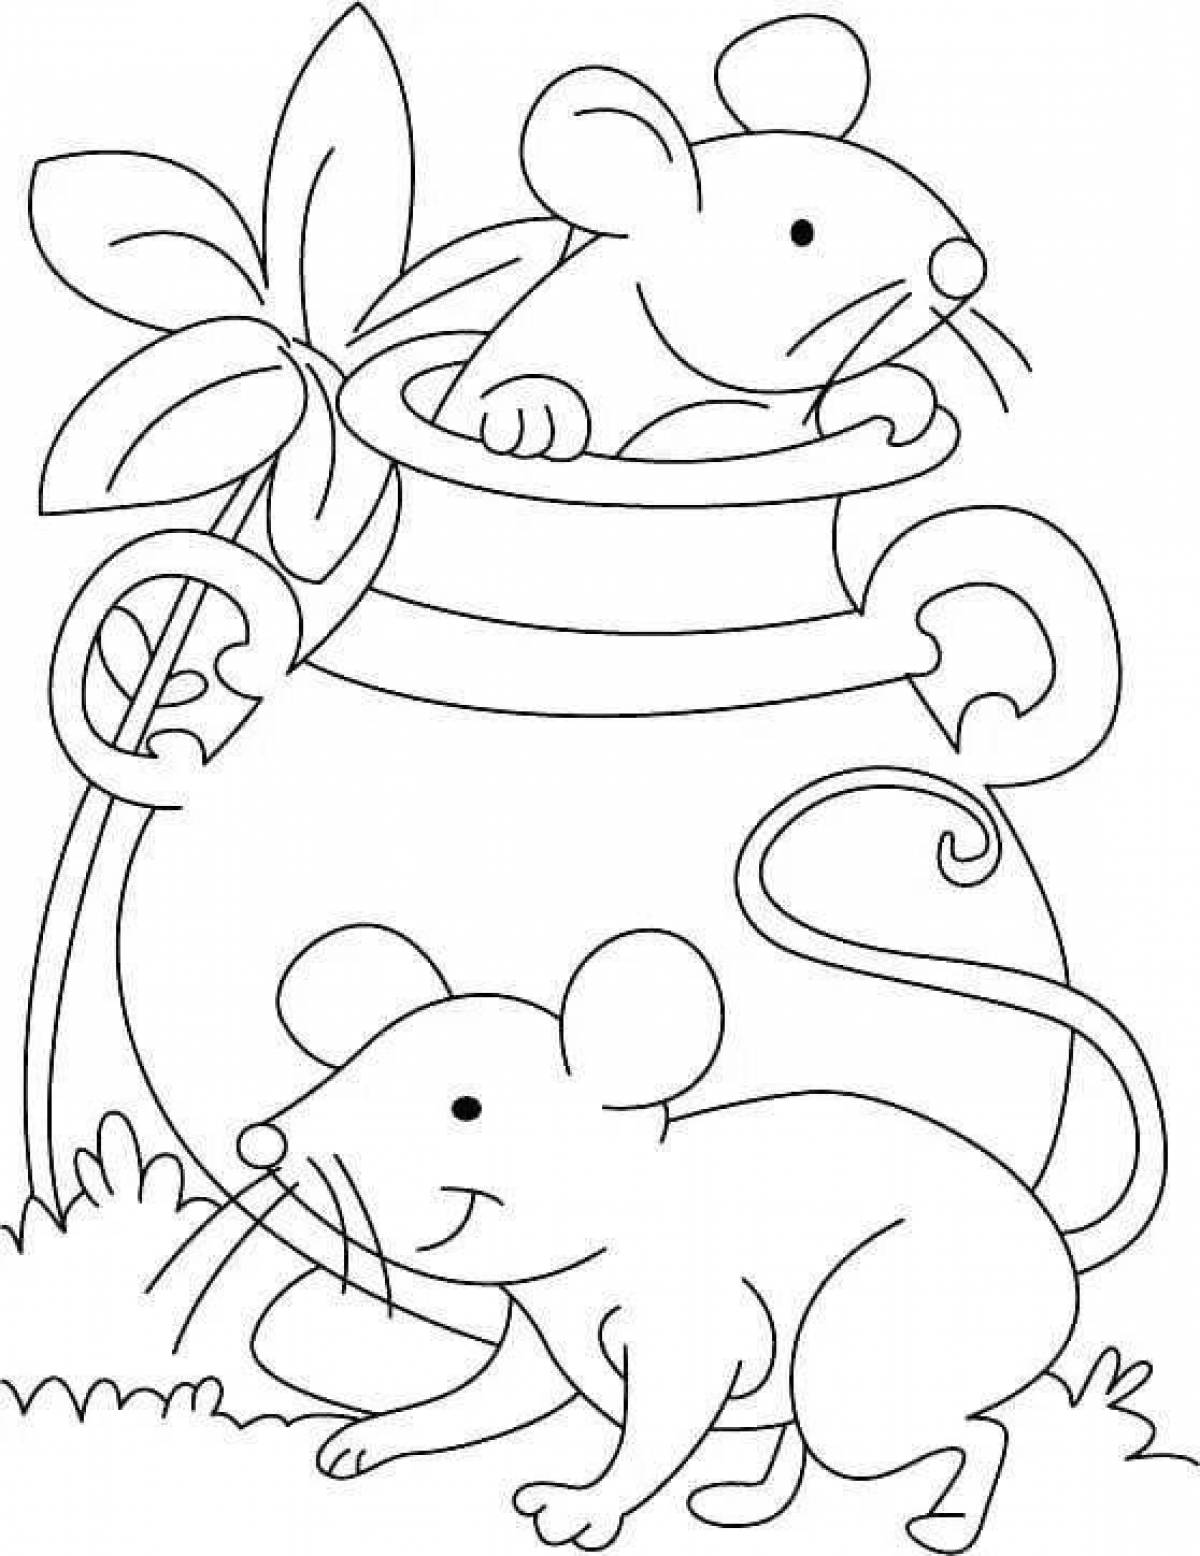 Fairy mouse norushka coloring book